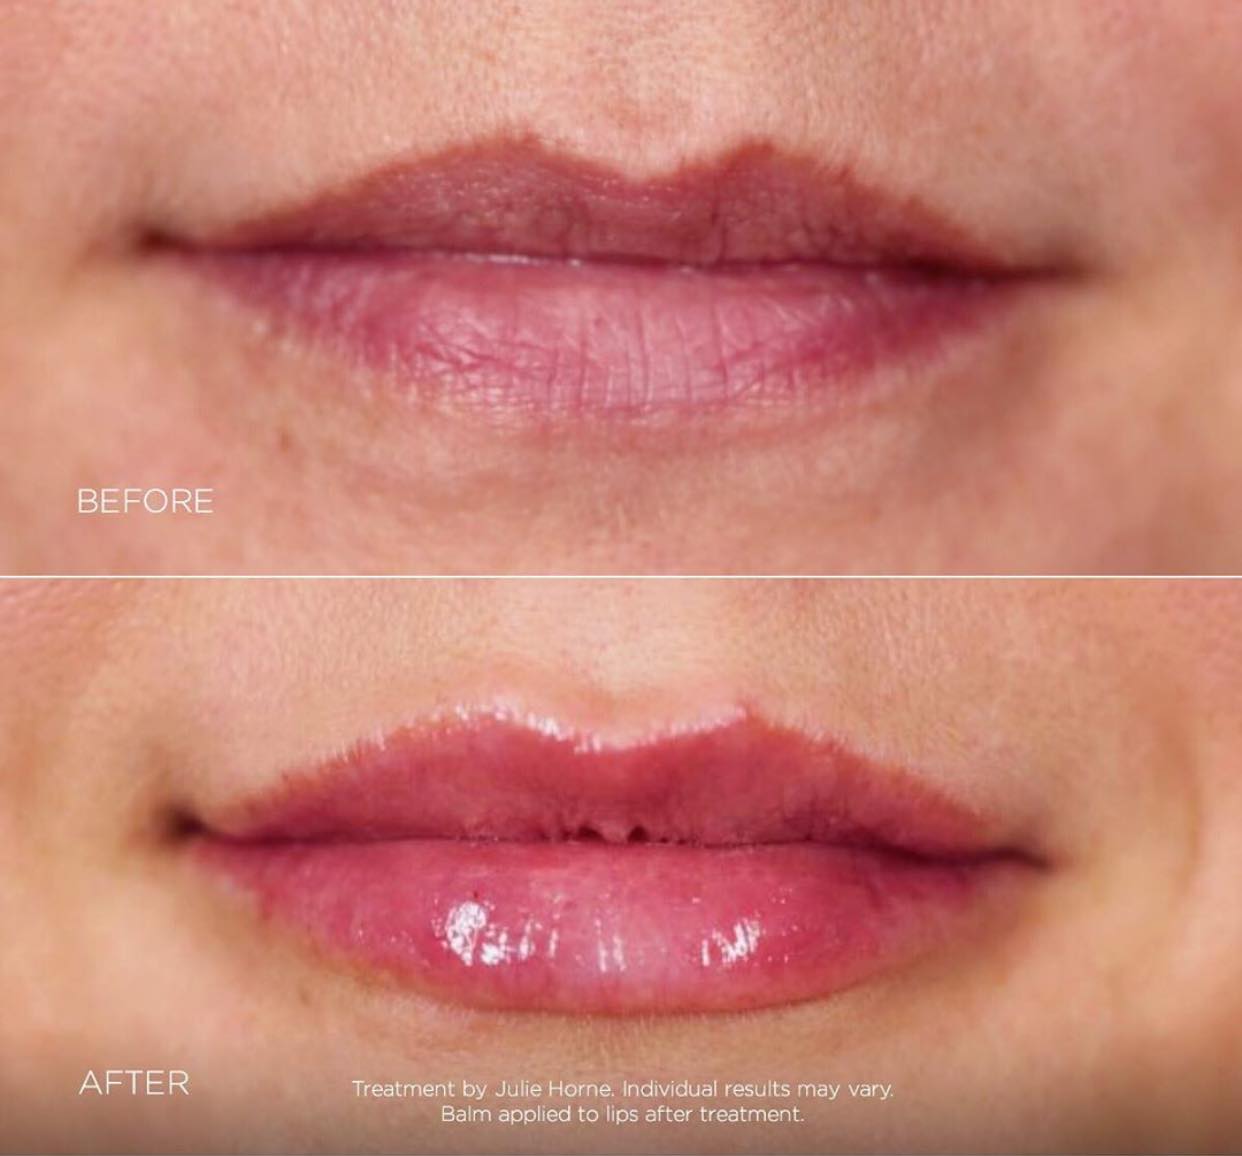 Lip enhancement using dermal fillers